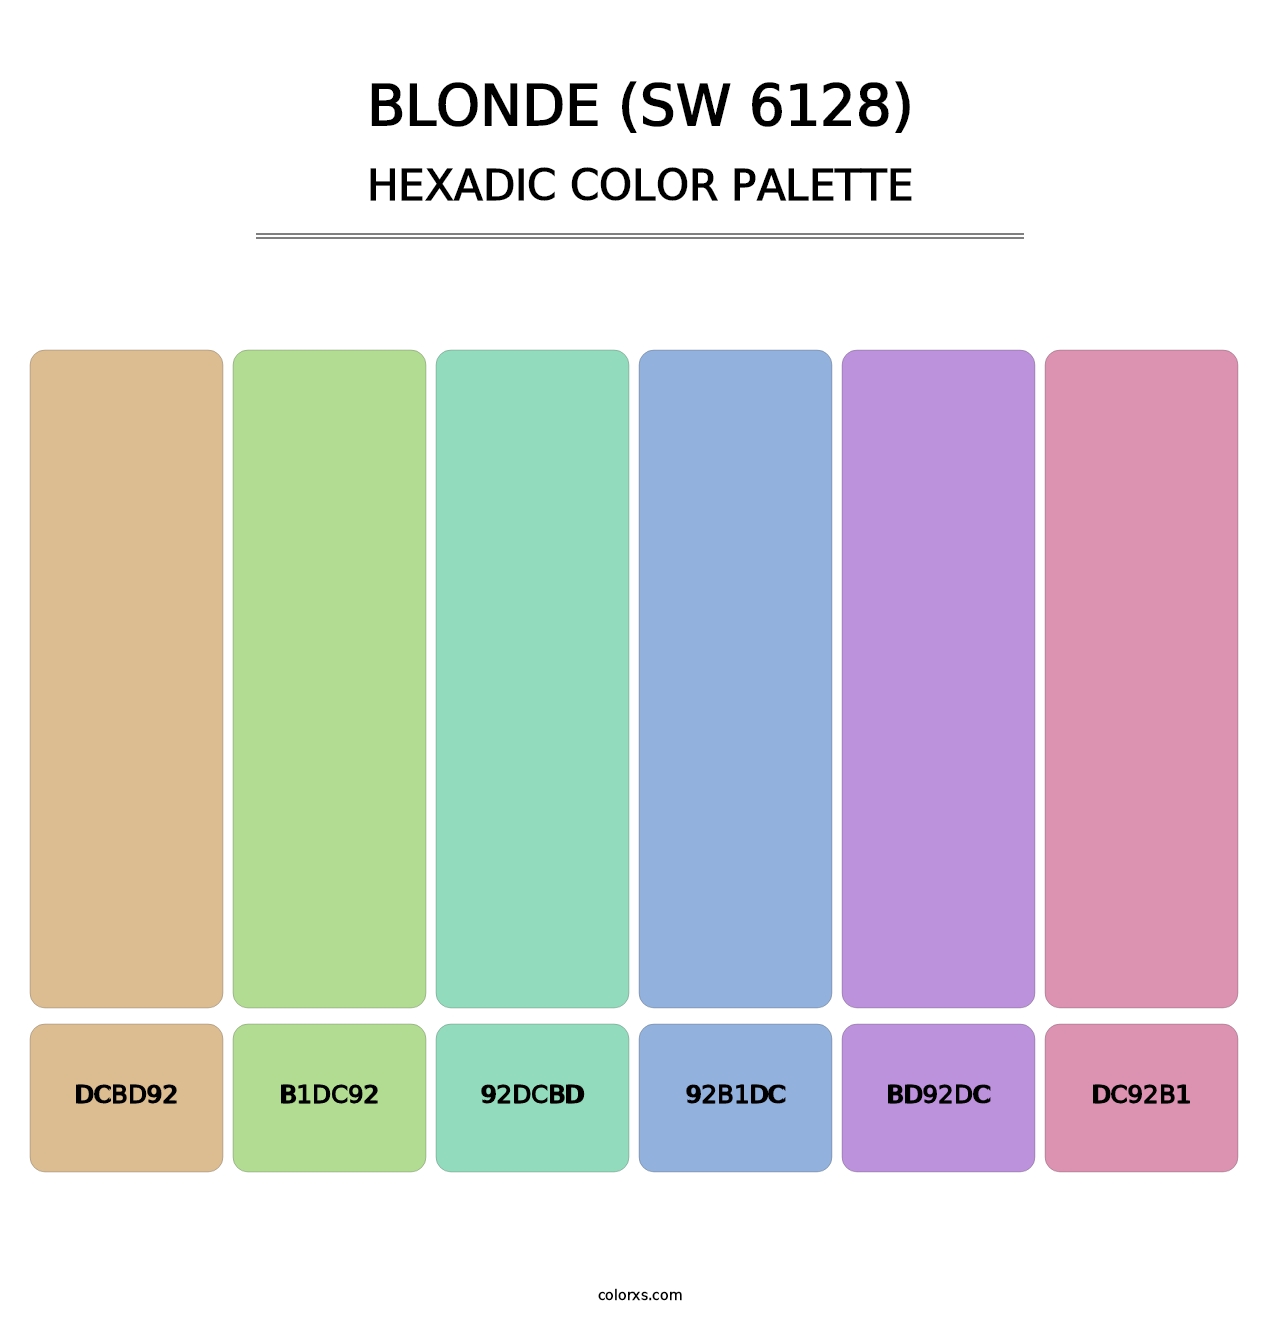 Blonde (SW 6128) - Hexadic Color Palette